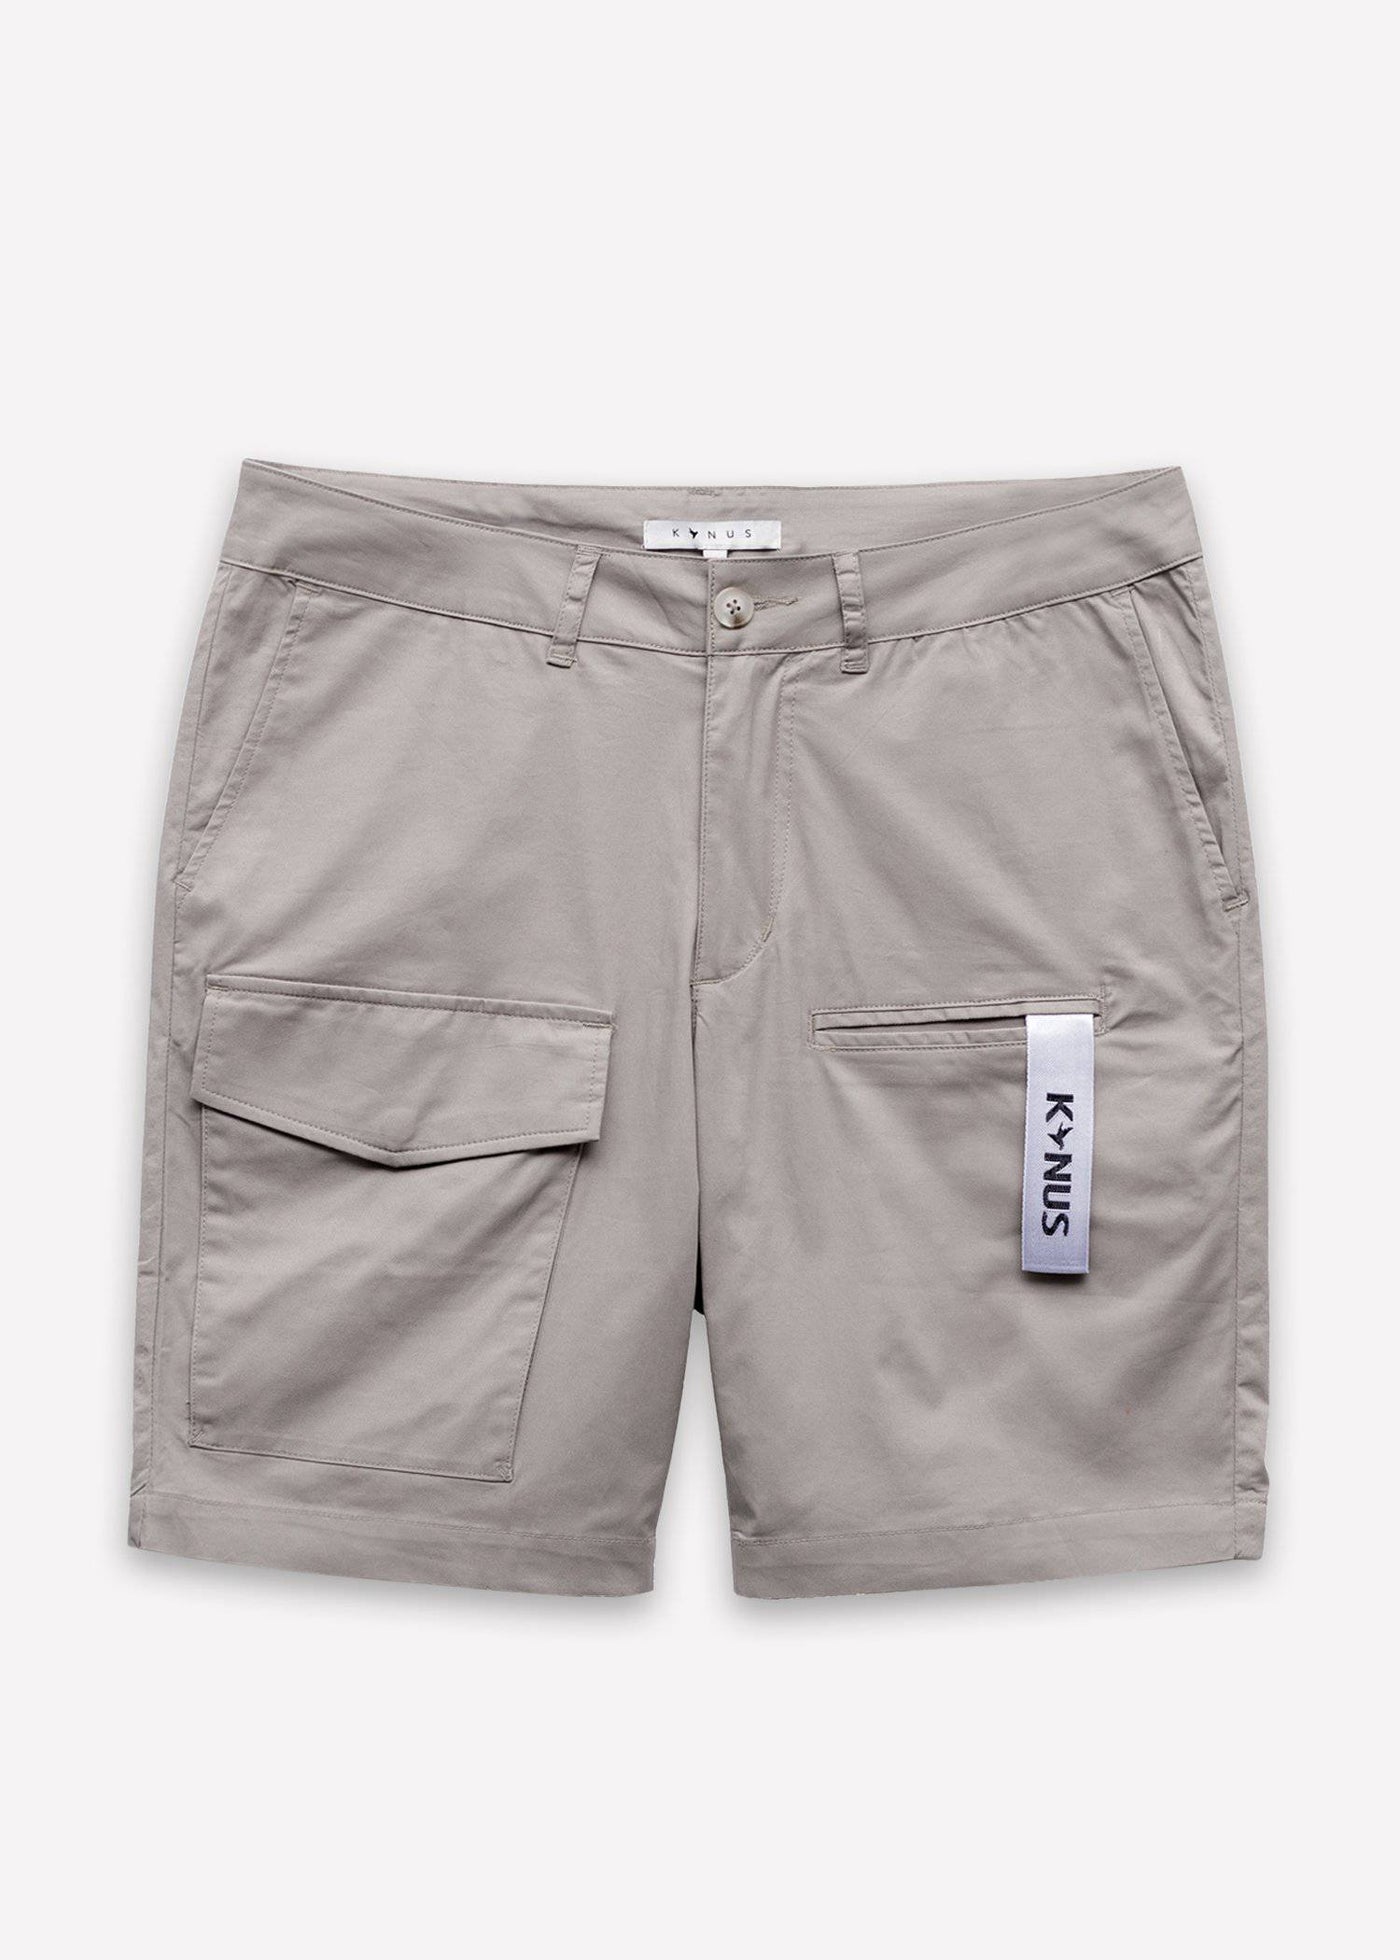 Konus Men's 6 Pocket Chino Shorts in Gray by Shop at Konus